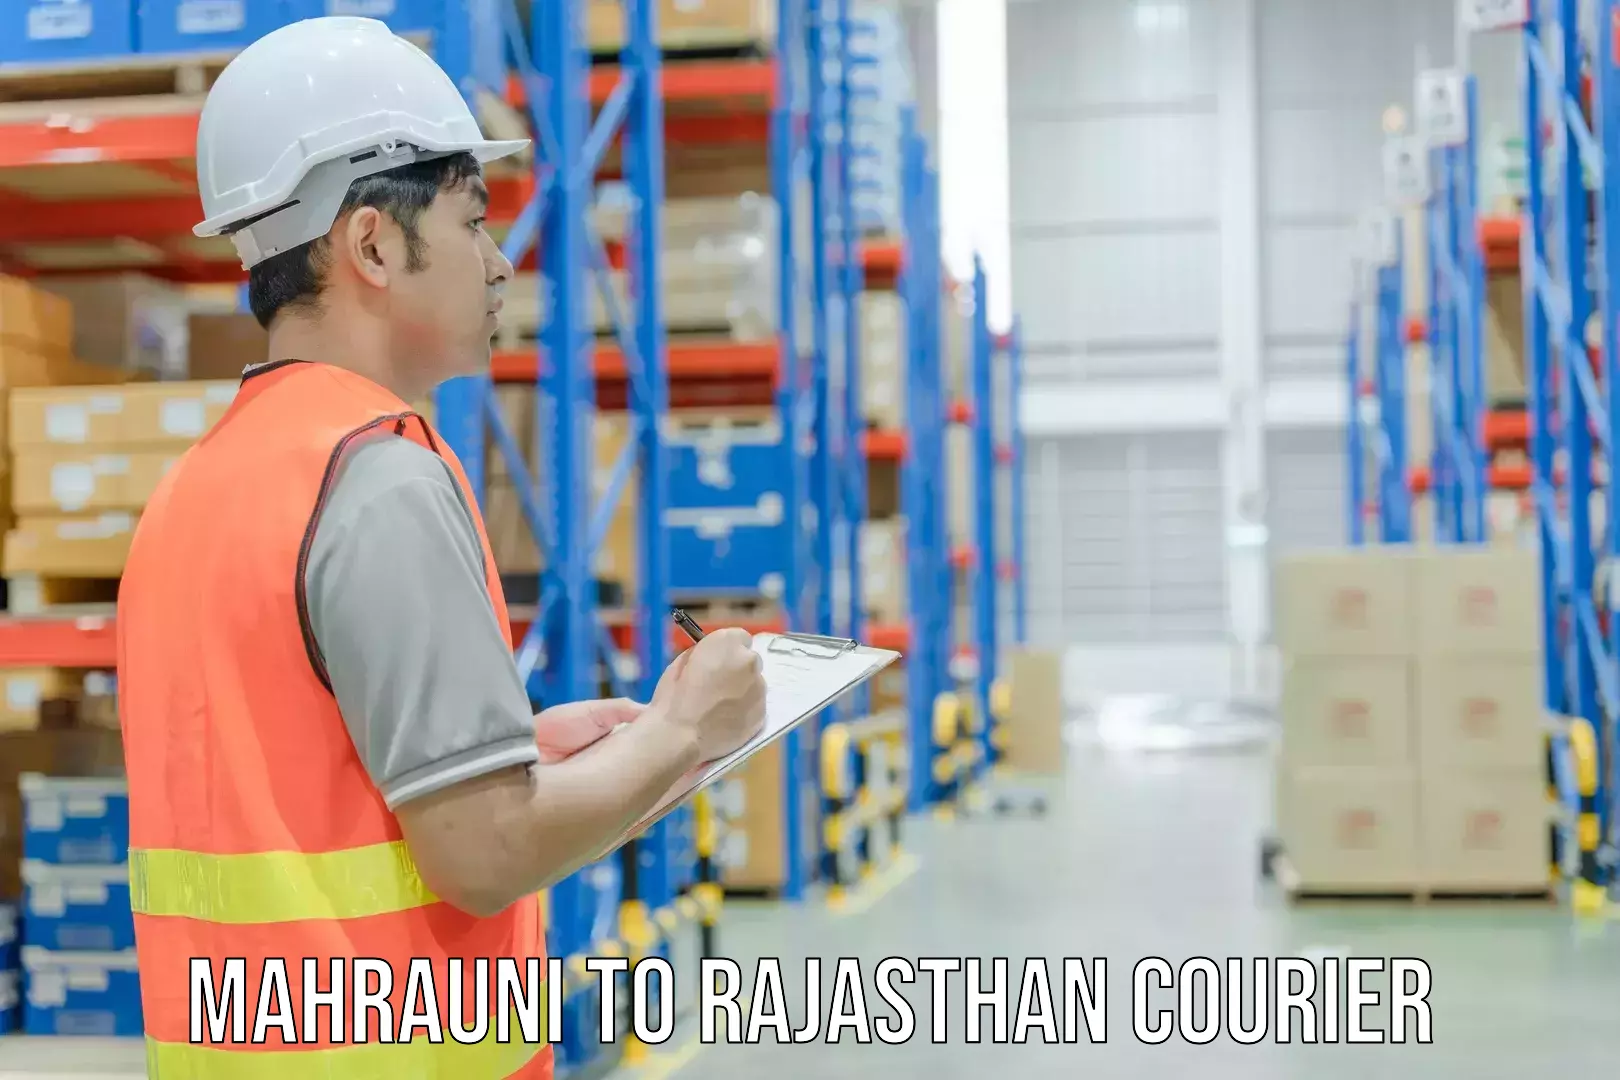 Digital courier platforms Mahrauni to Asind